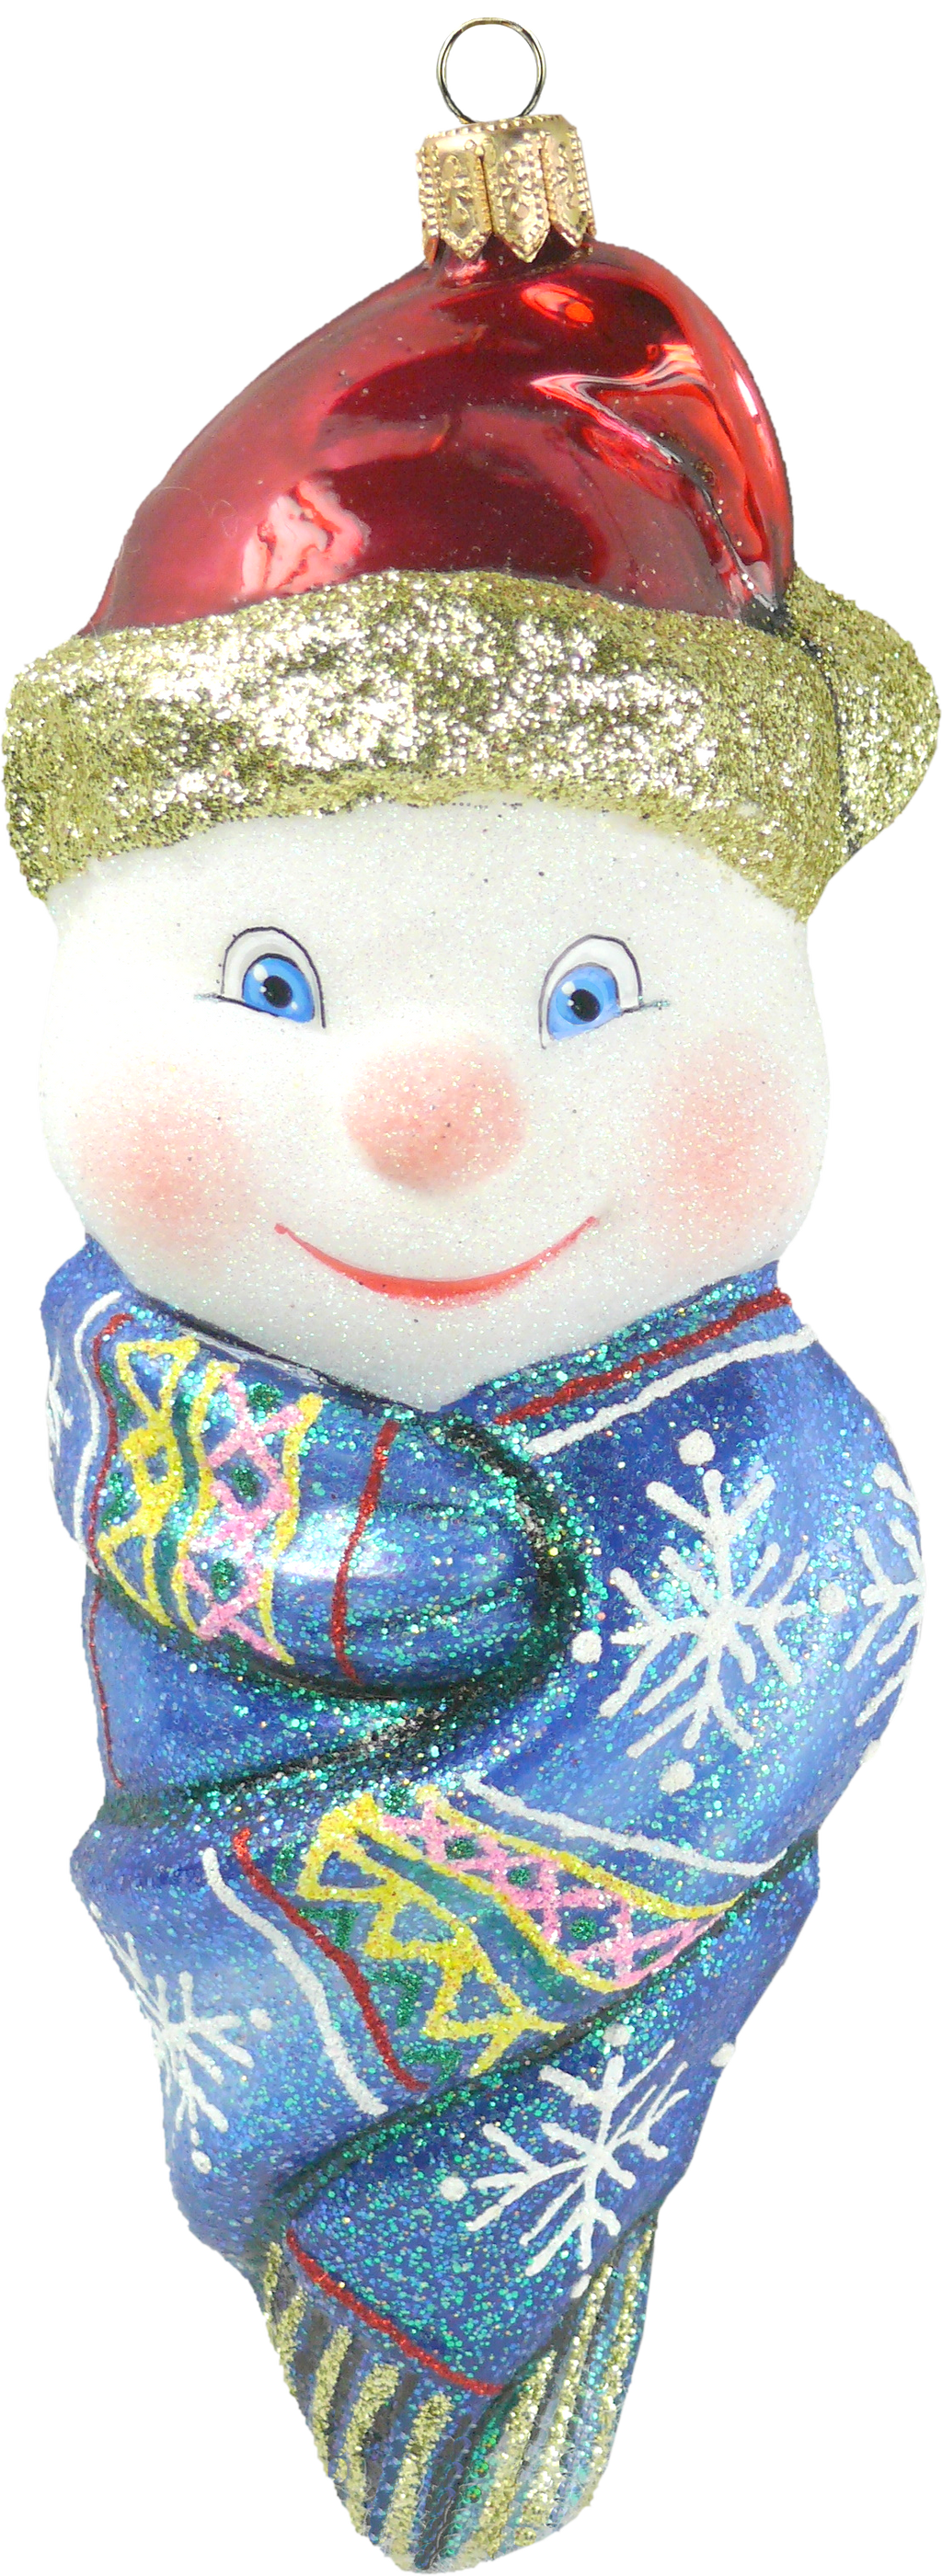 Snowman in Scarf - Mysteria Christmas Ornaments